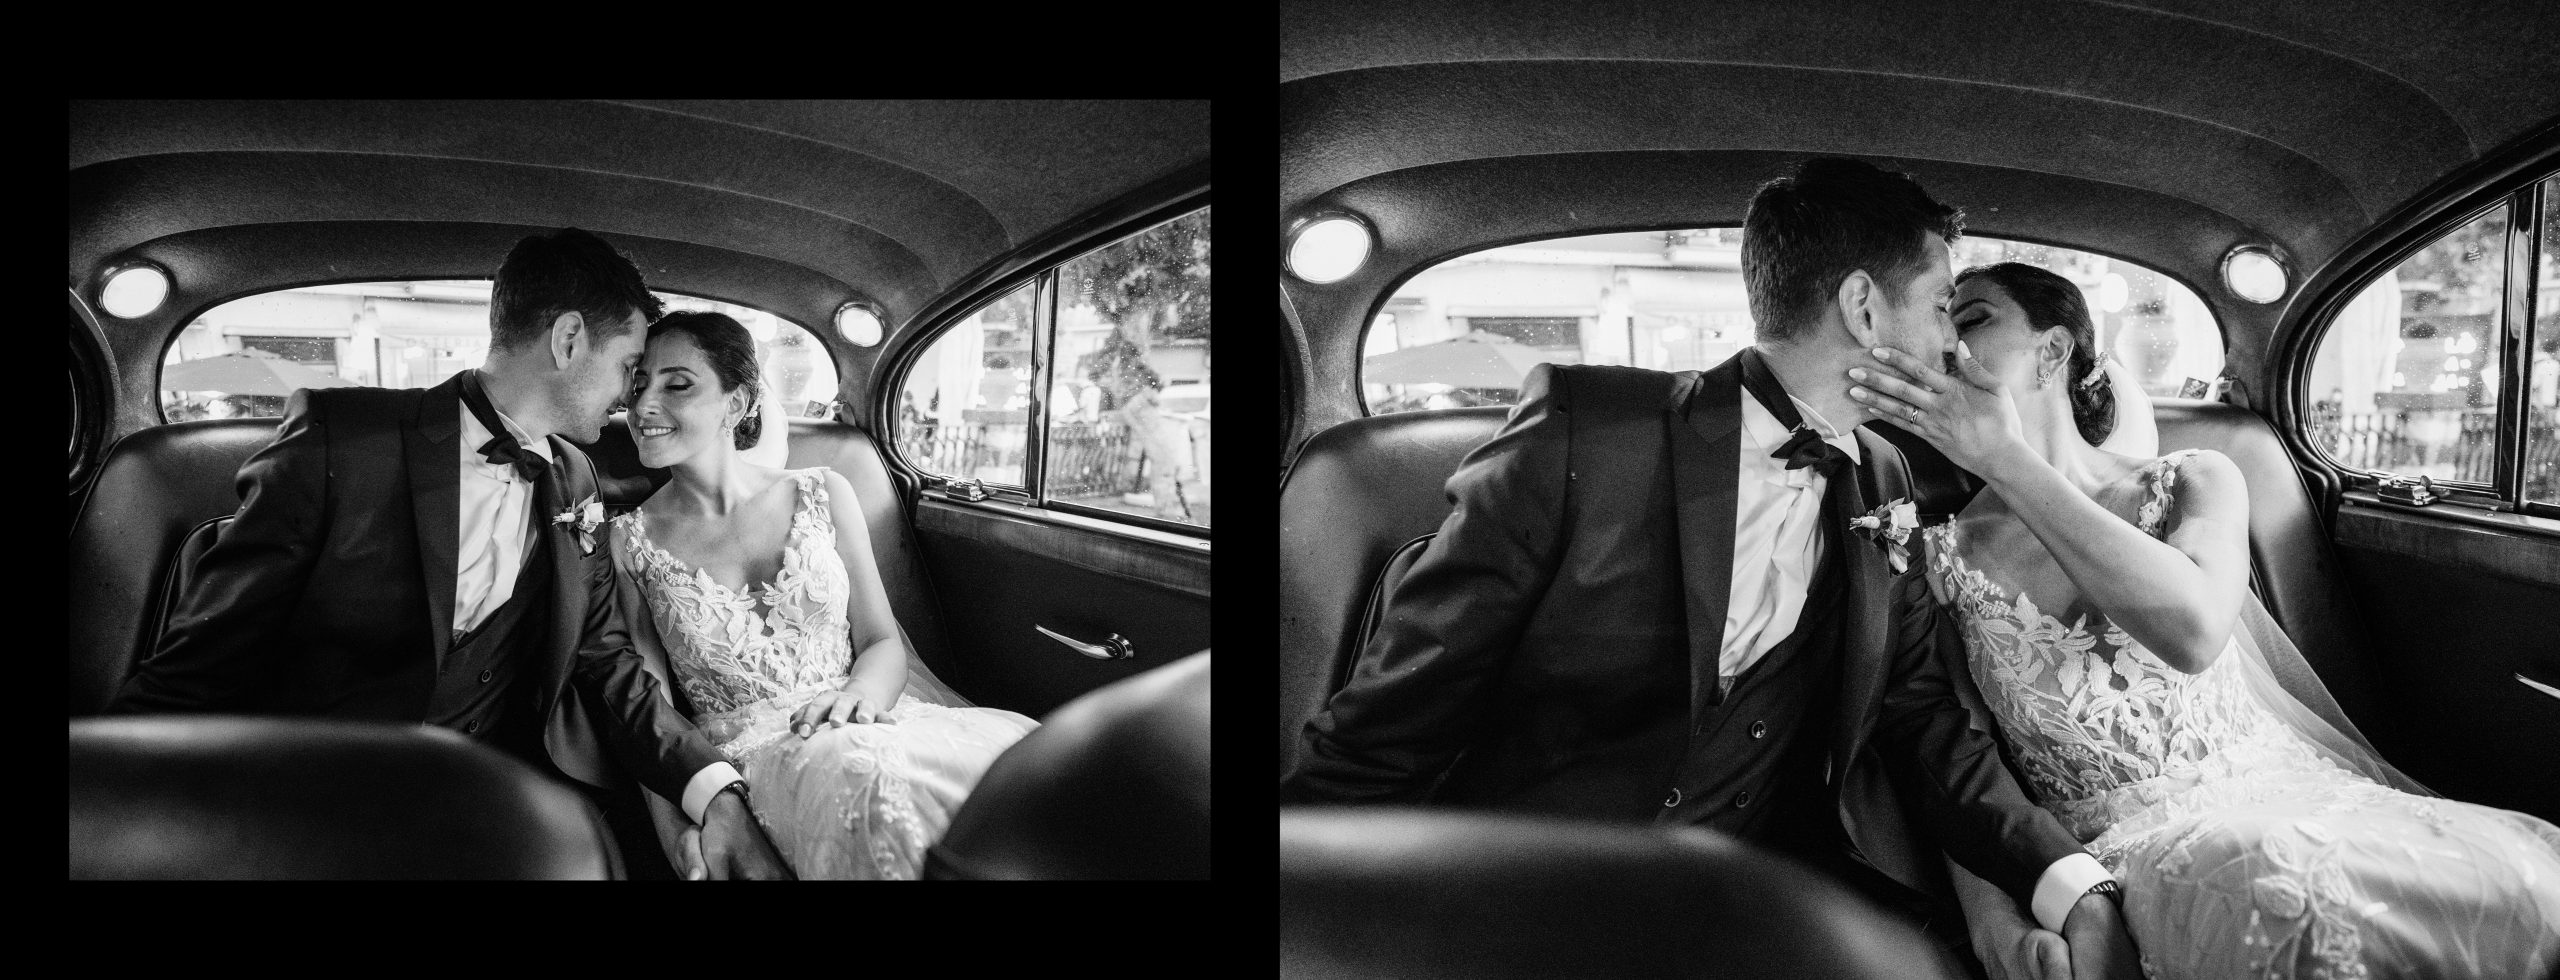 Jan e Melania 42 scaled - fotografo matrimonio catania